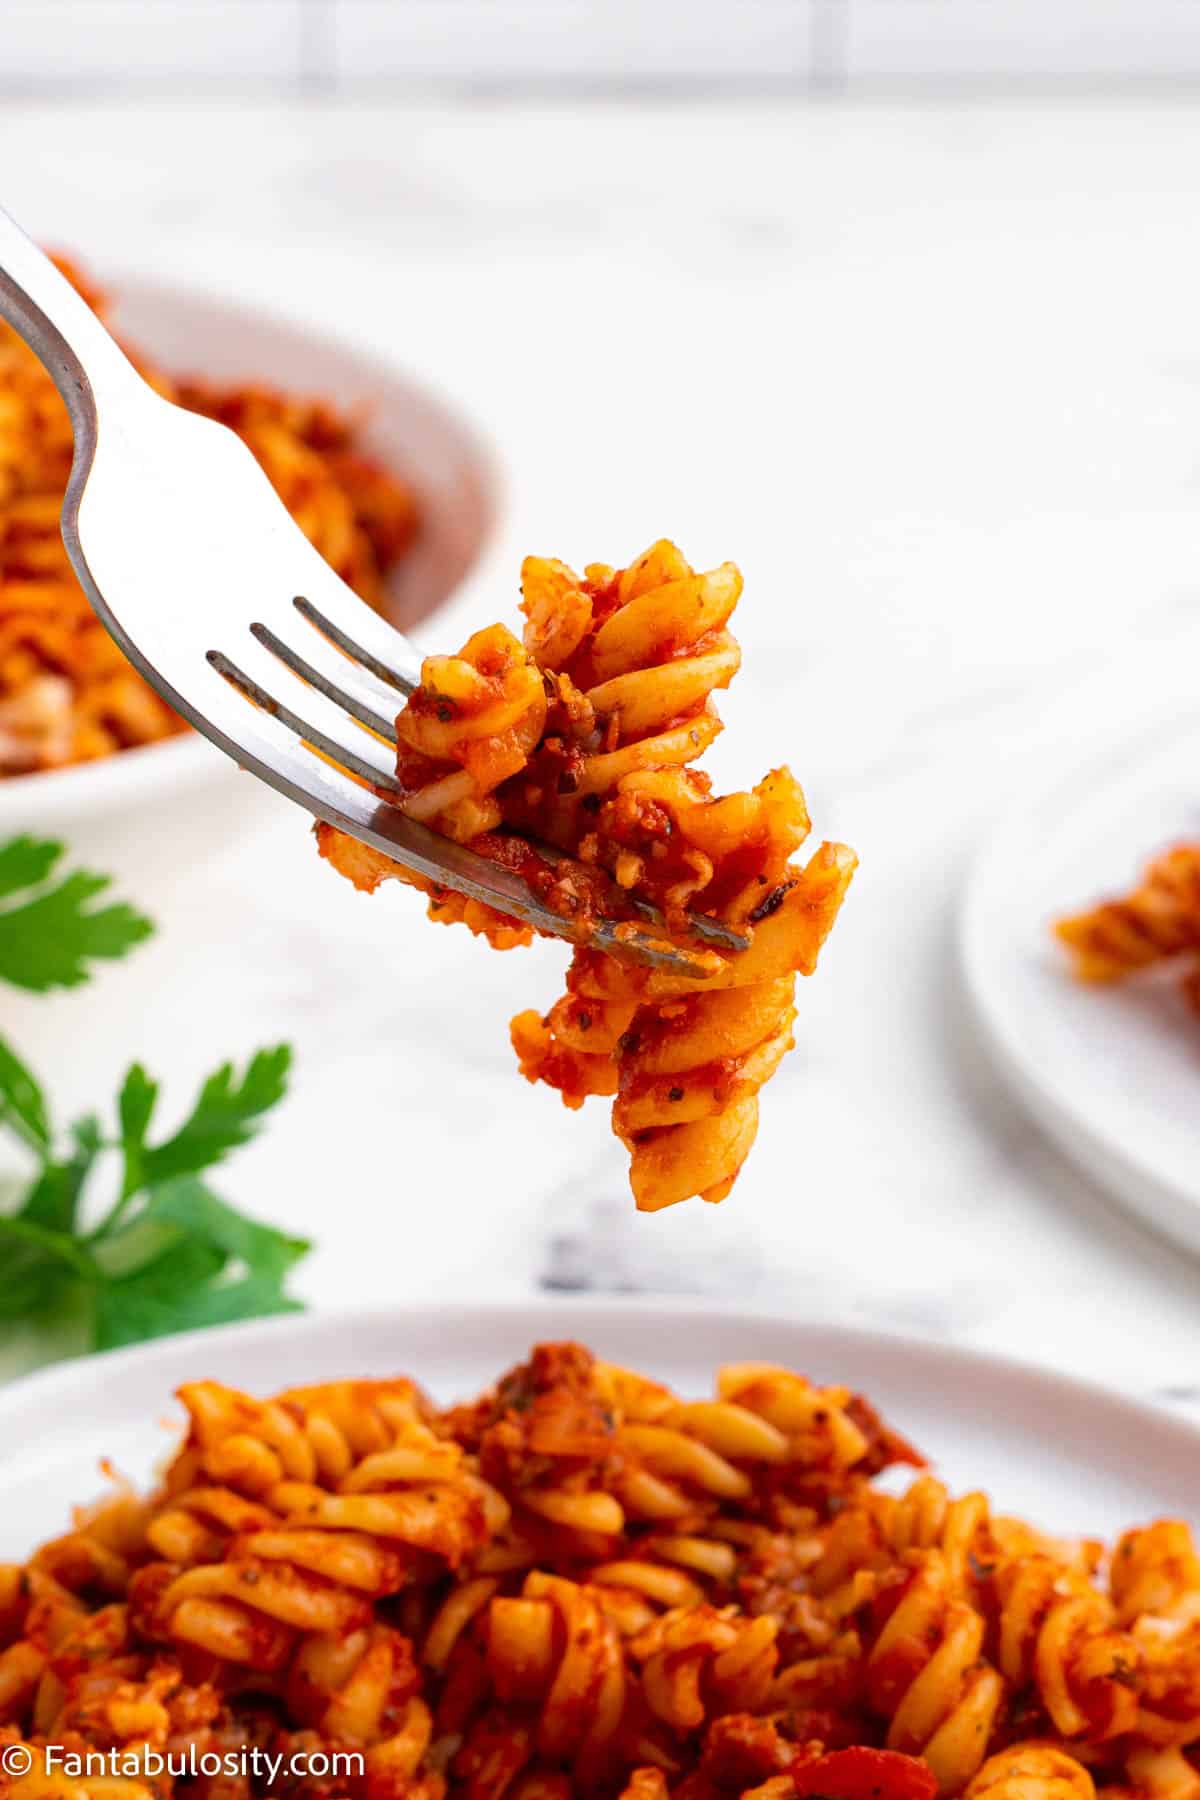 Fork holding a bite of sausage pasta bake.